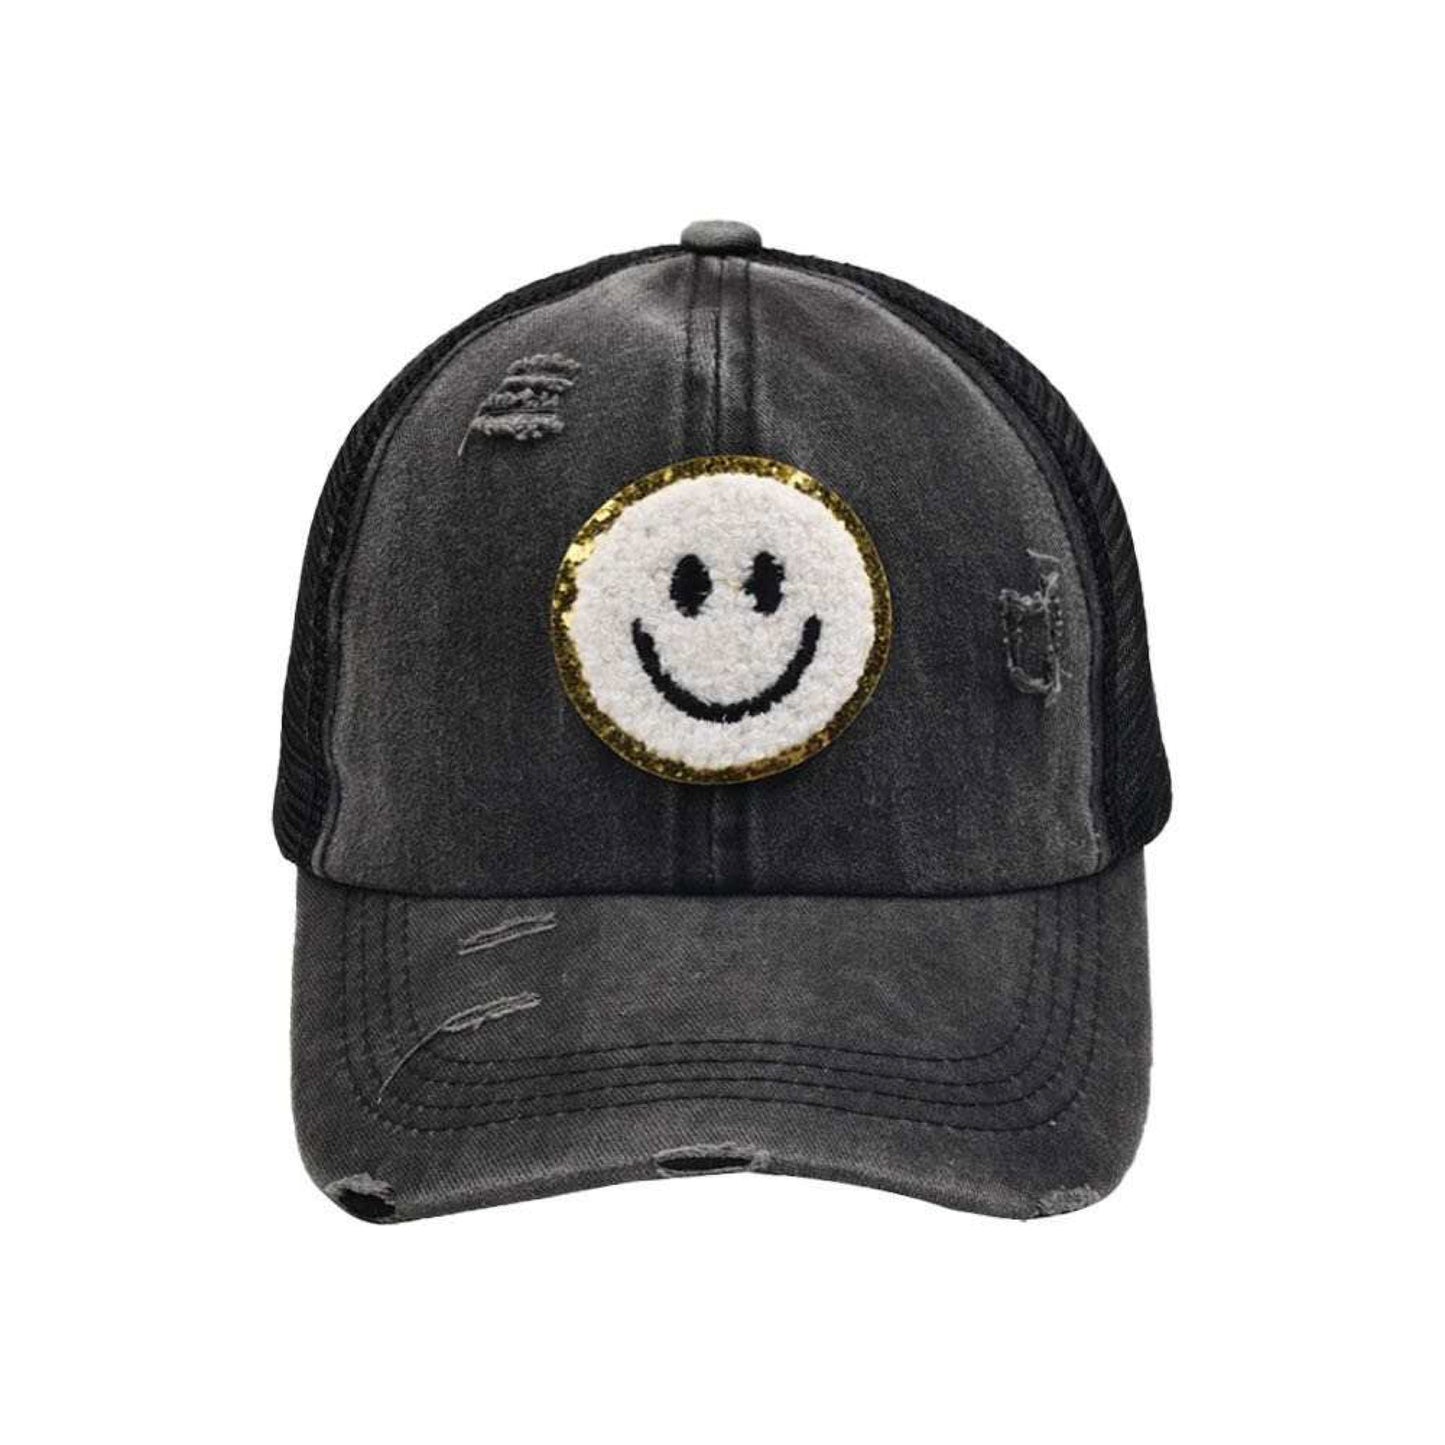 Hat - Smile, Distressed